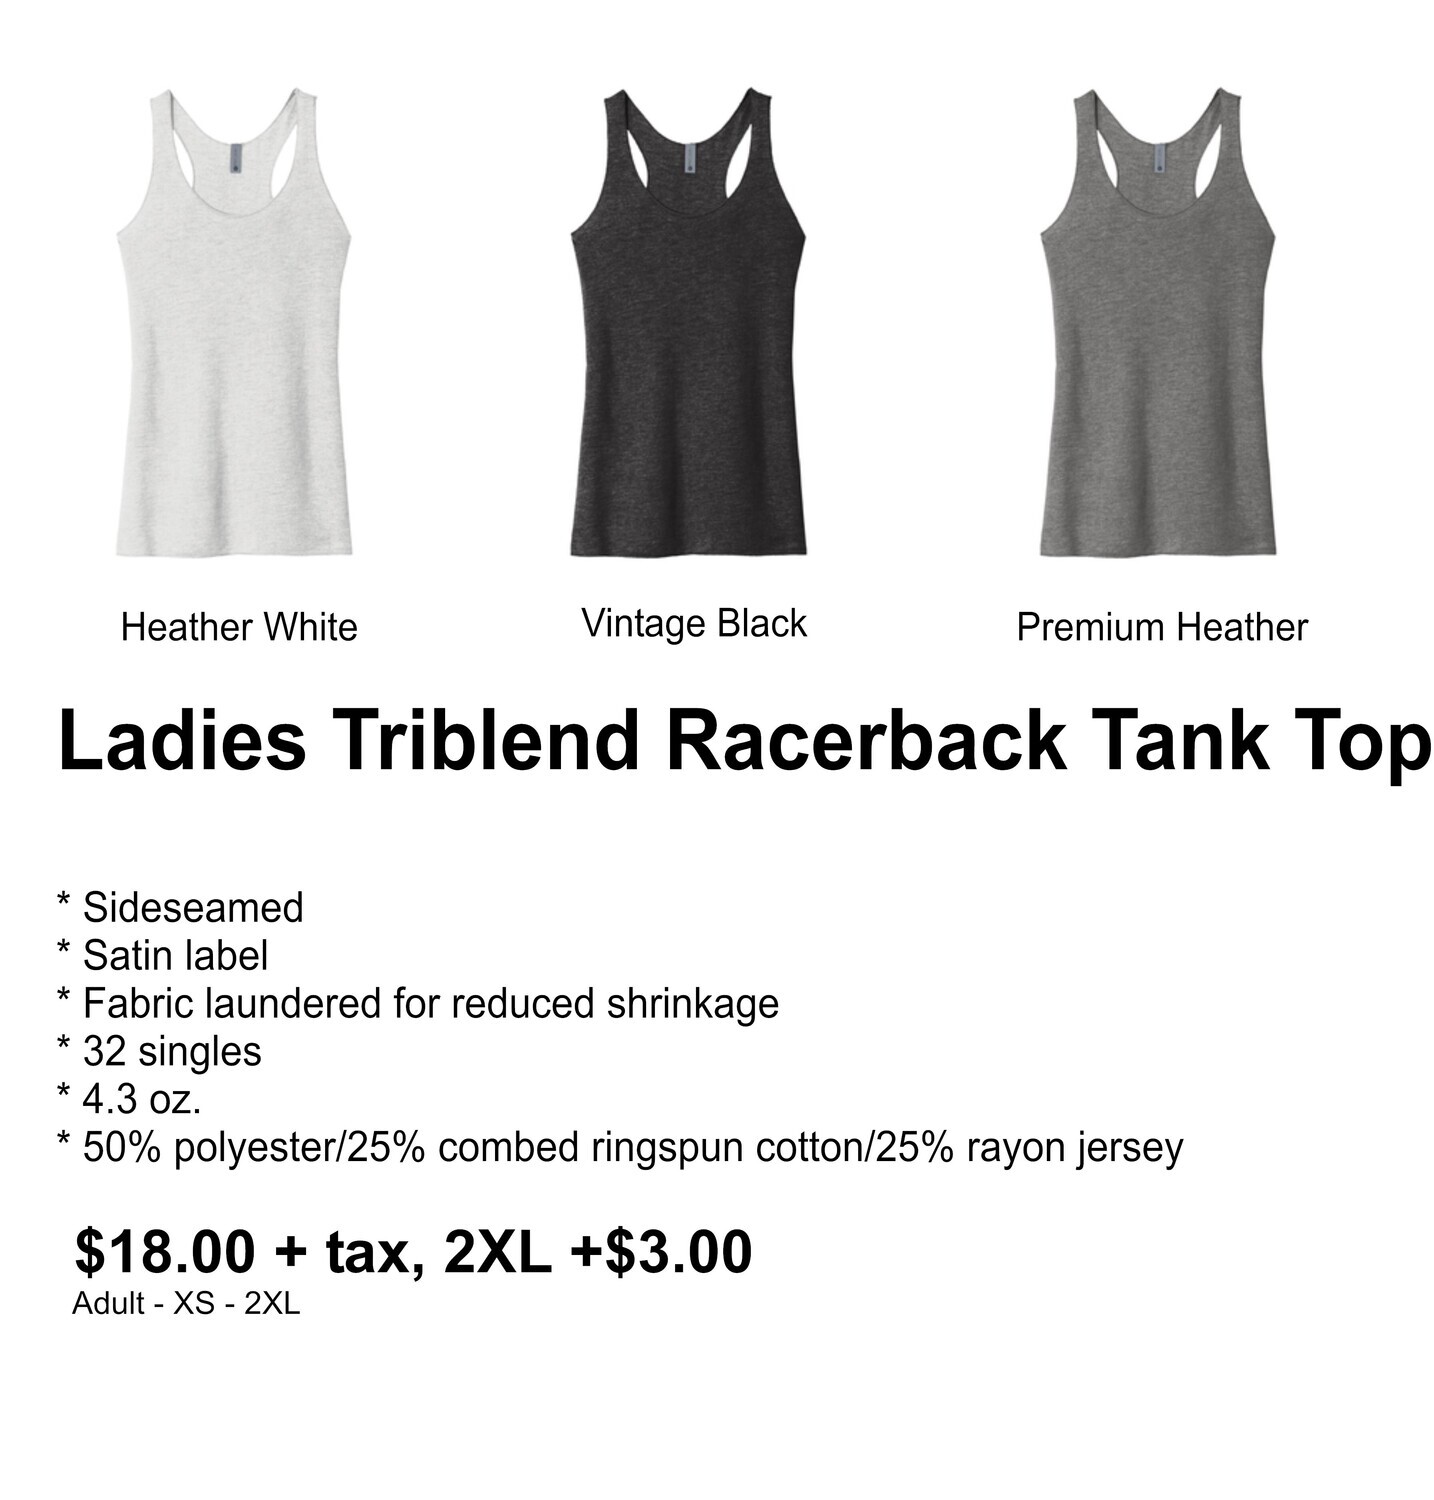 Triblend Racerback Tank Top